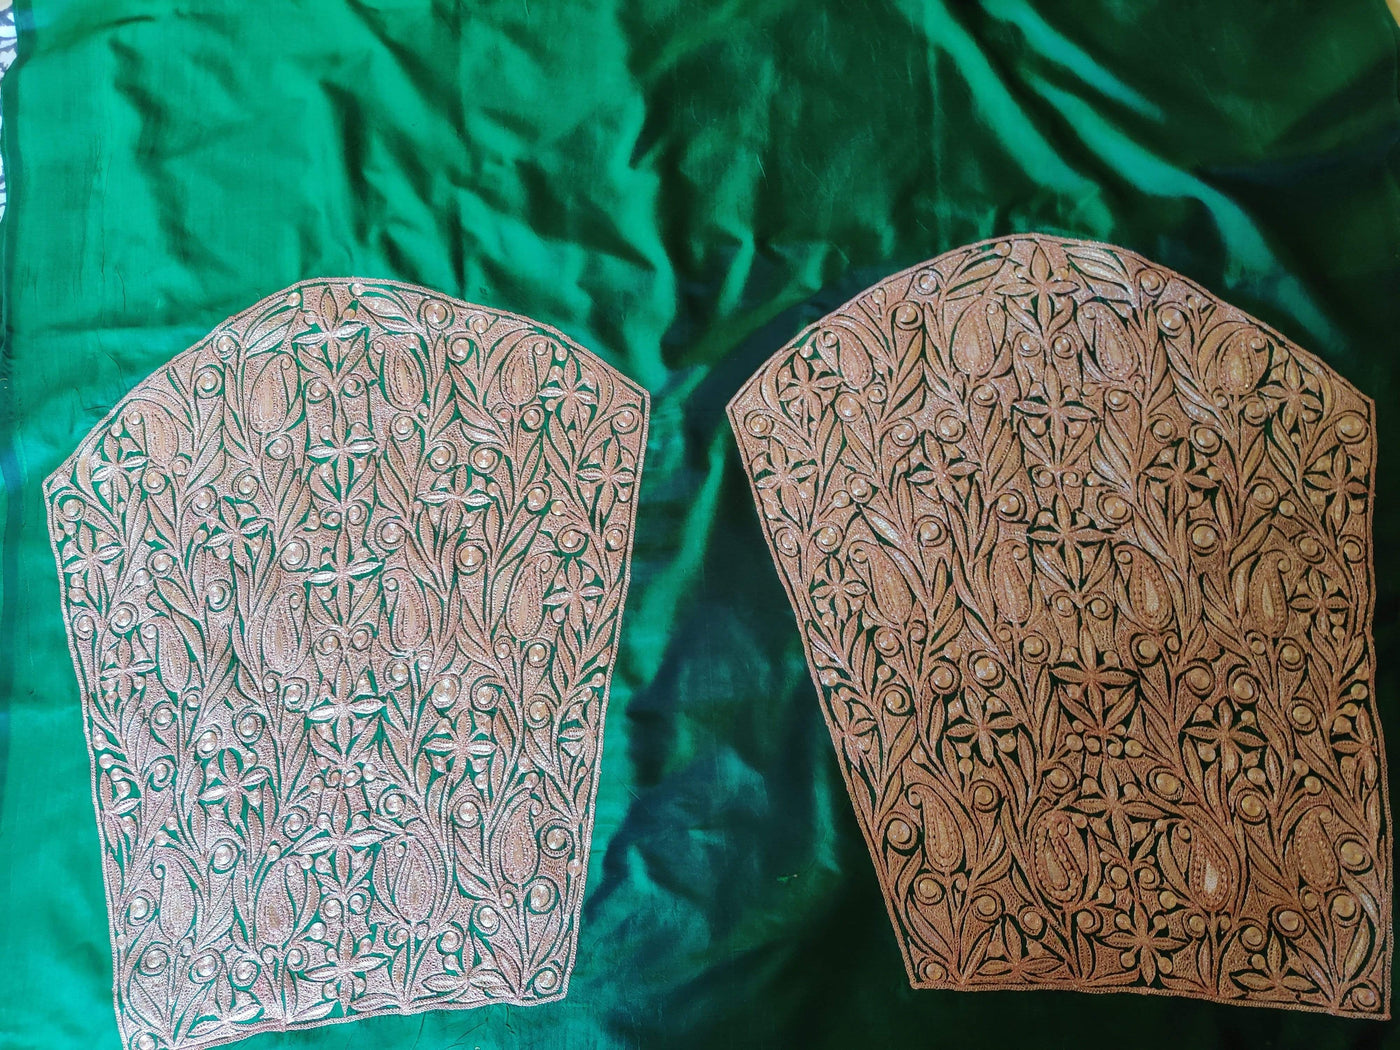 Kashmir Thread Summer Suit Pure Silk Tilla Kashmiri Suit Three-Piece With Heavy Embroidery On Sleeves